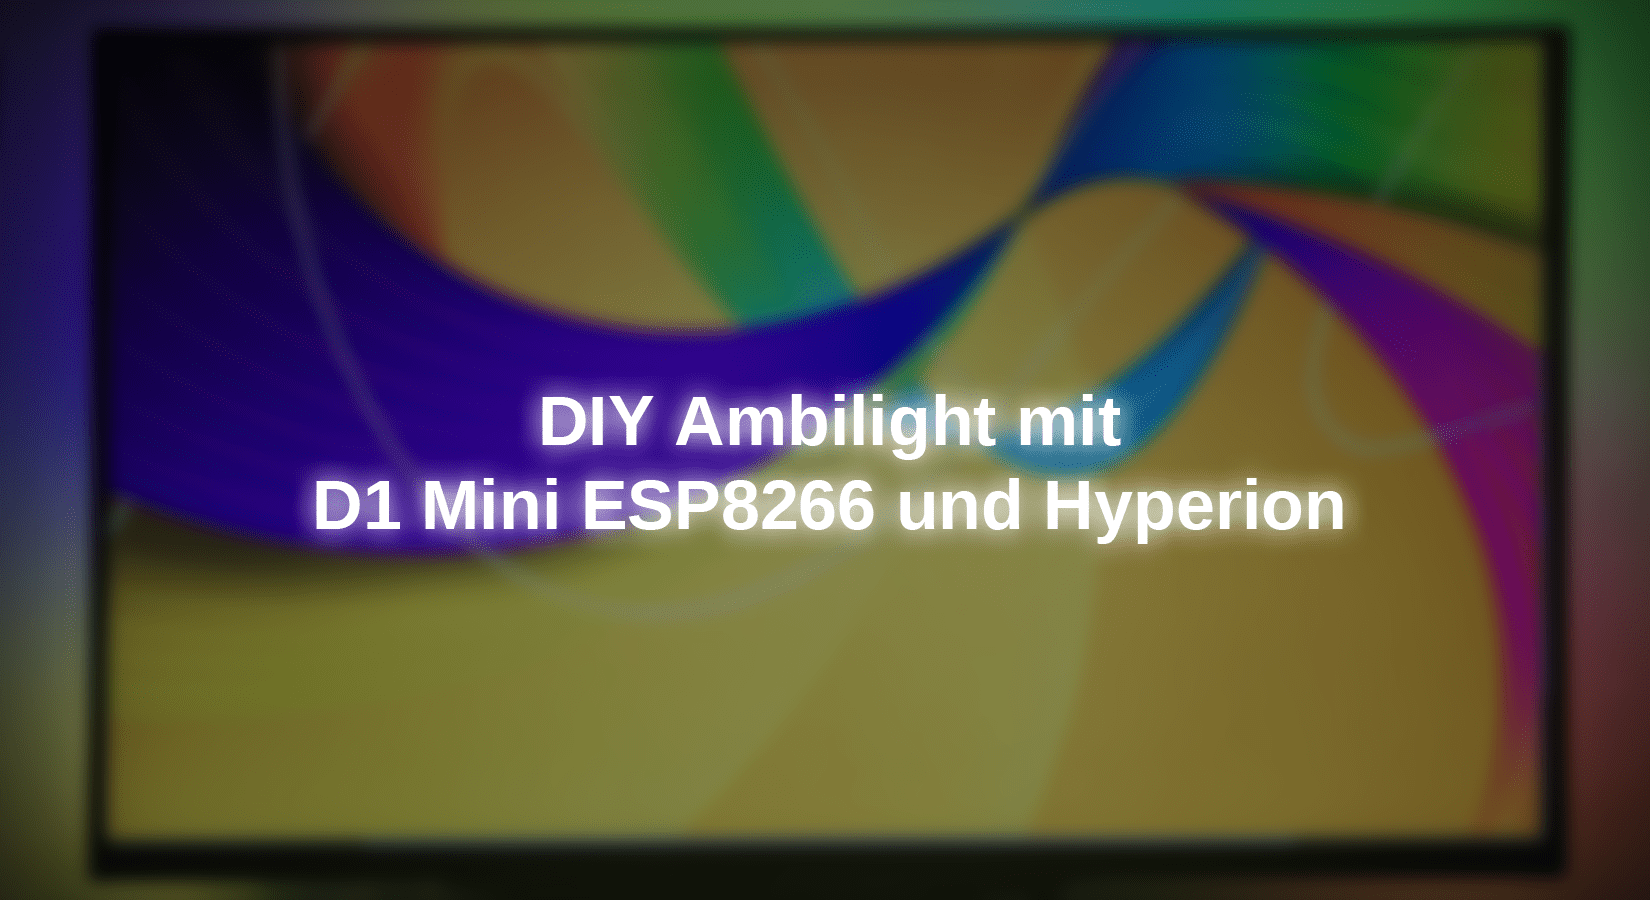 DIY Ambilight mit D1 Mini ESP8266 und Hyperion - AZ-Delivery